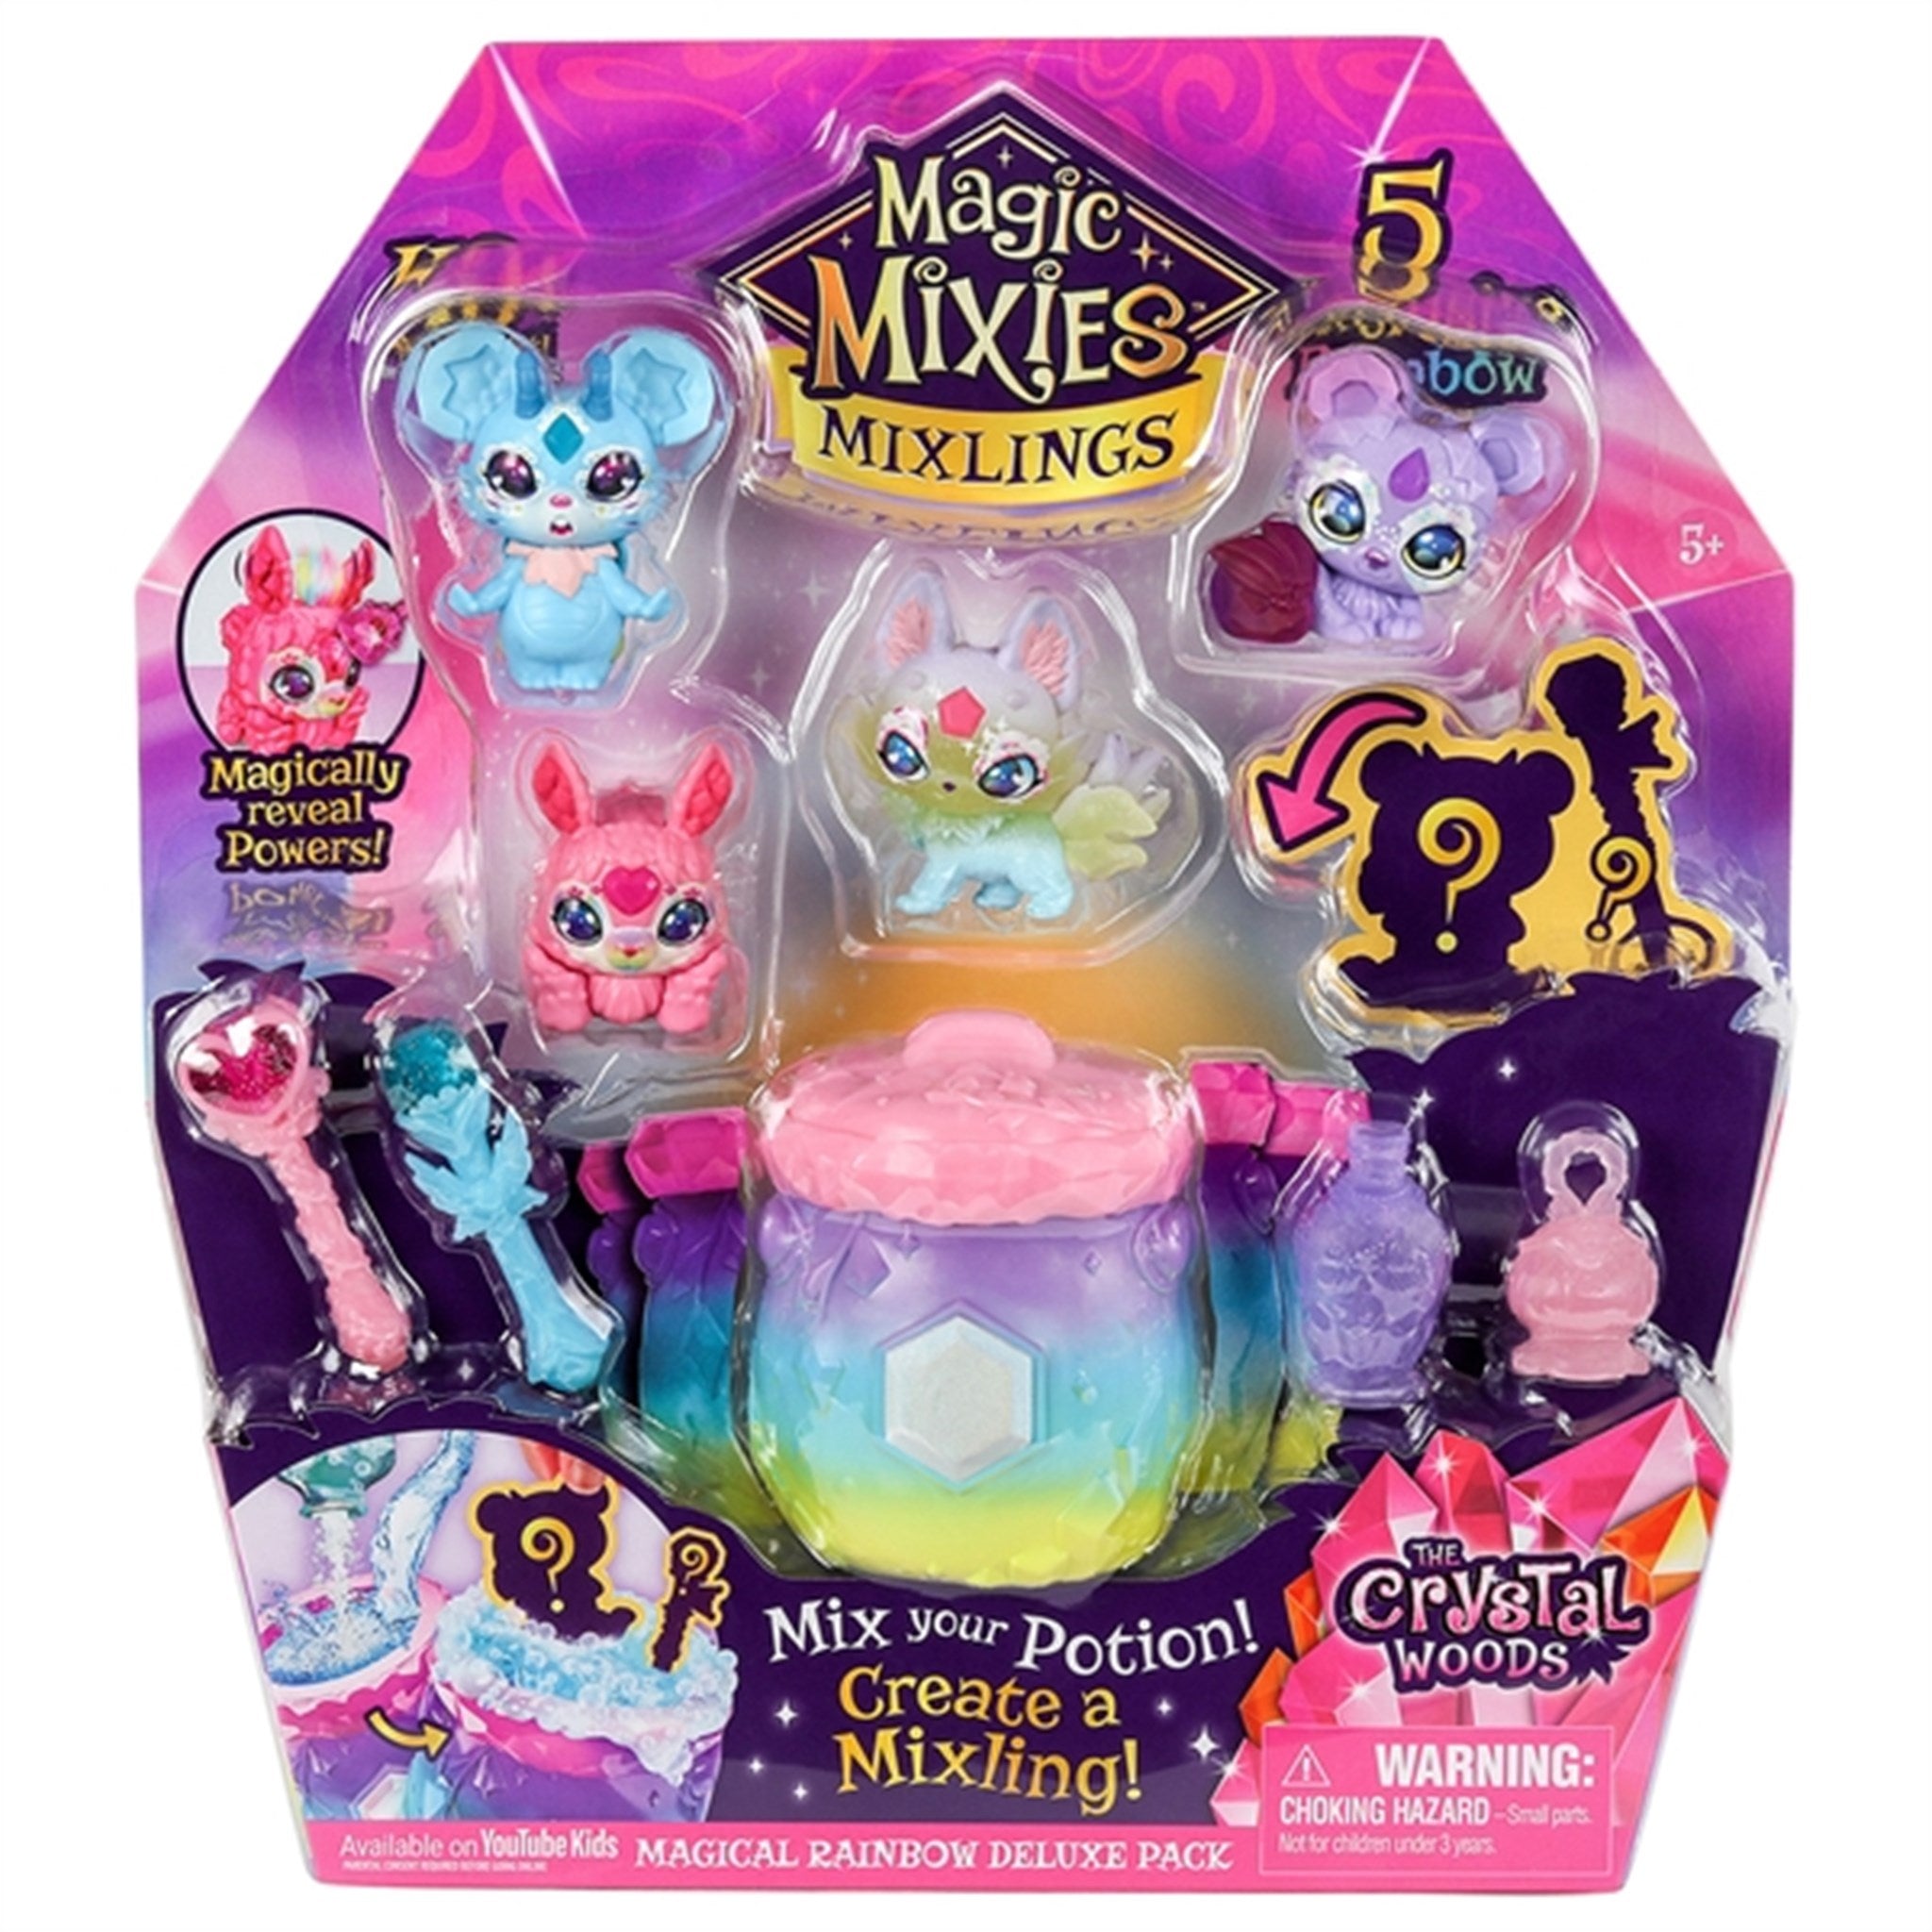 Magic Mixies Mixlings Mega Pack